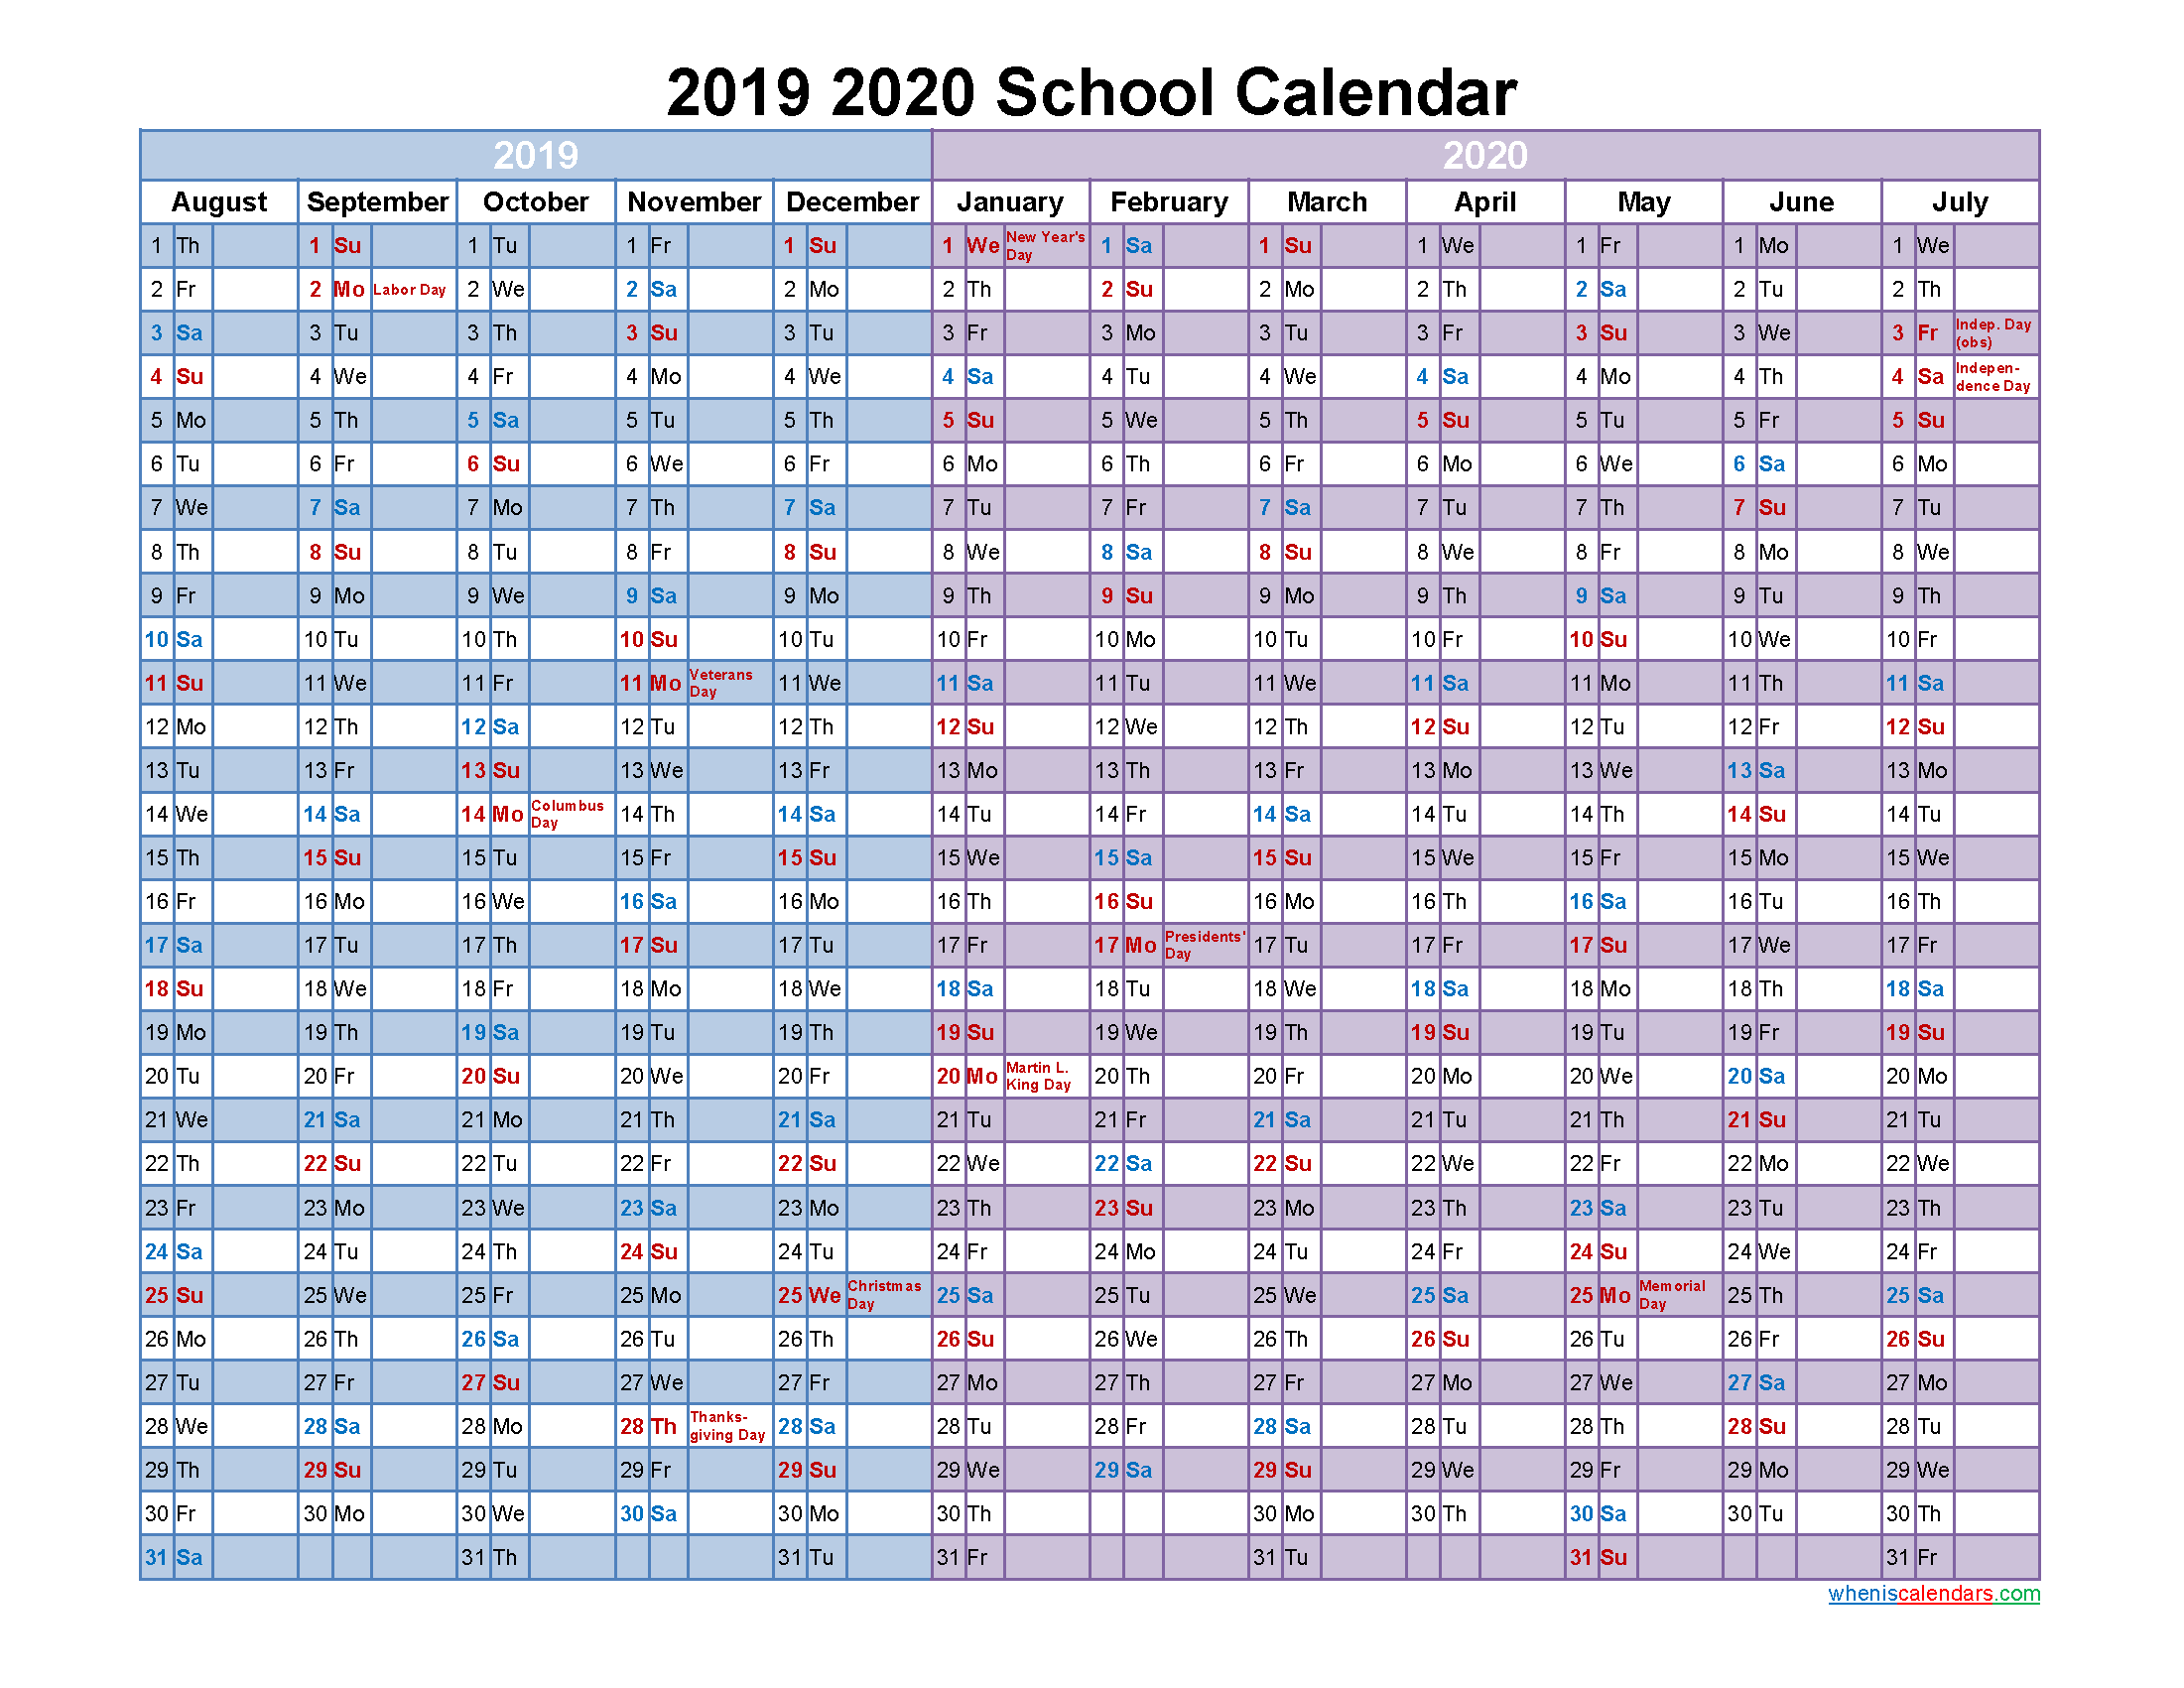 2019 and 2020 School Calendar Printable - Template No.20scl53